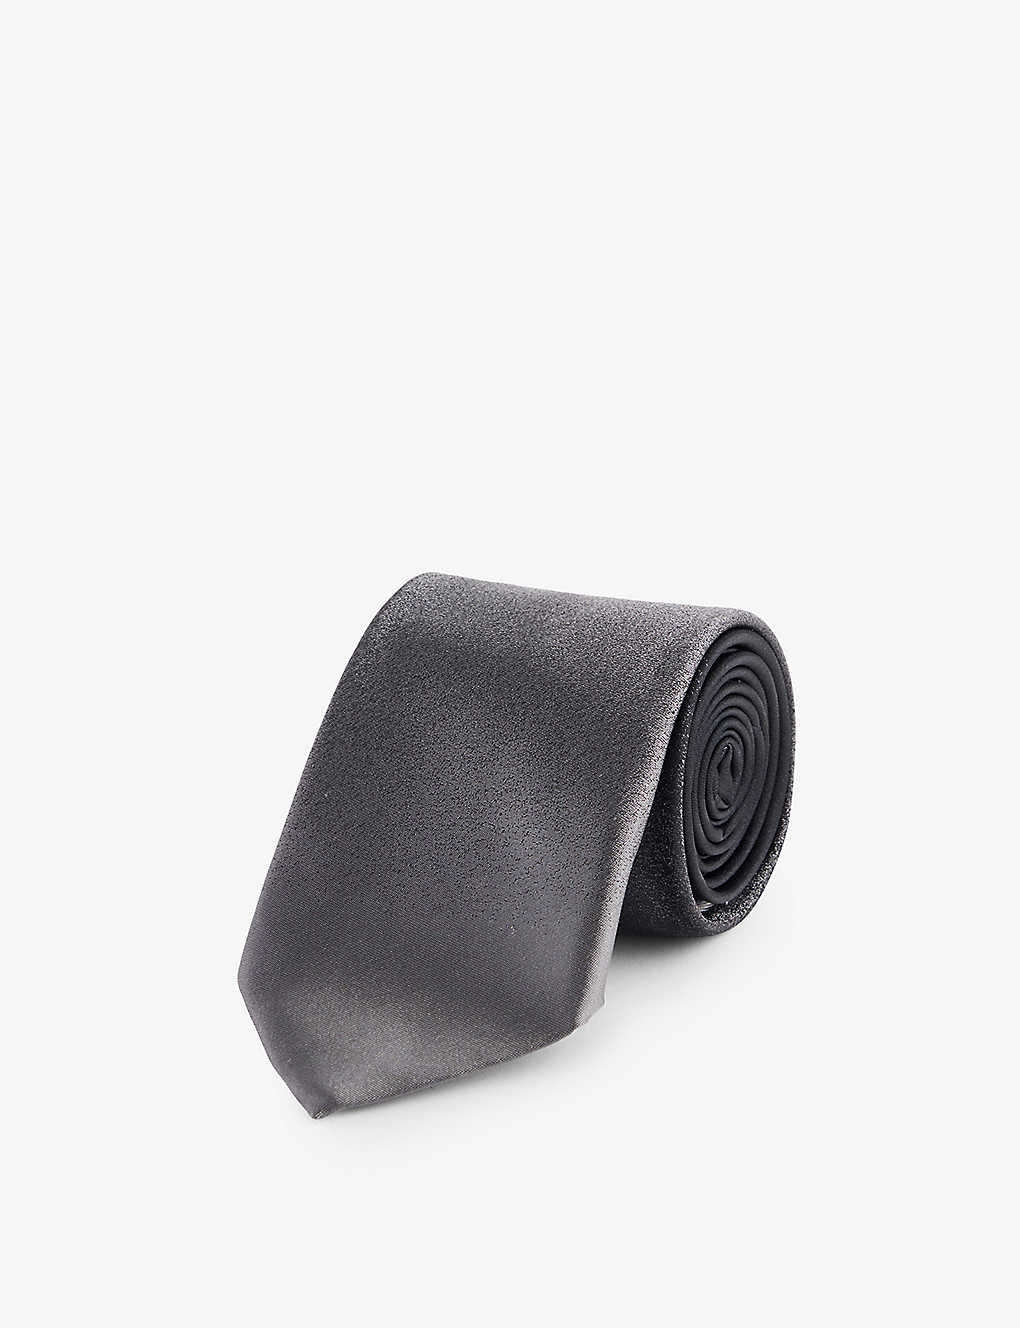 Ferragamo Man Nuanced Silk Jacquard Tie In Black/grey